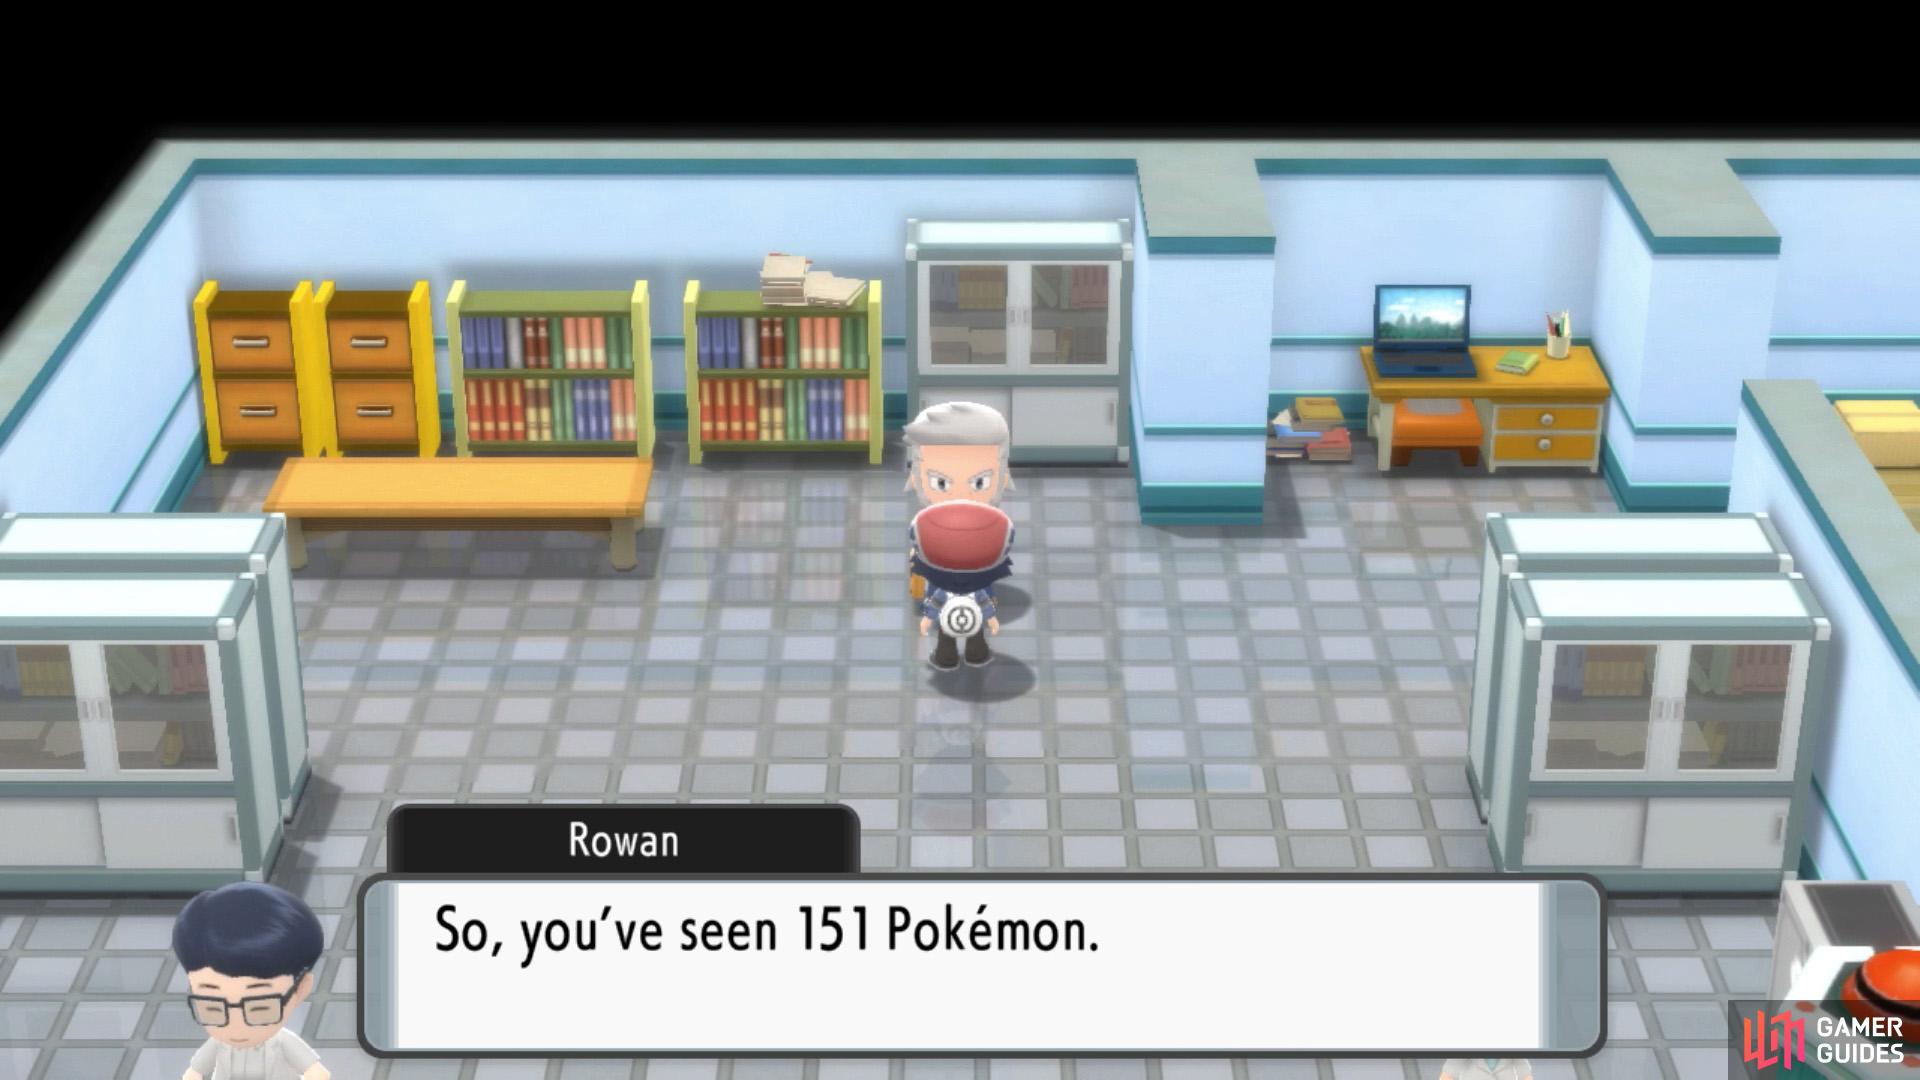 Ask Rowan to evaluate your Pokédex.